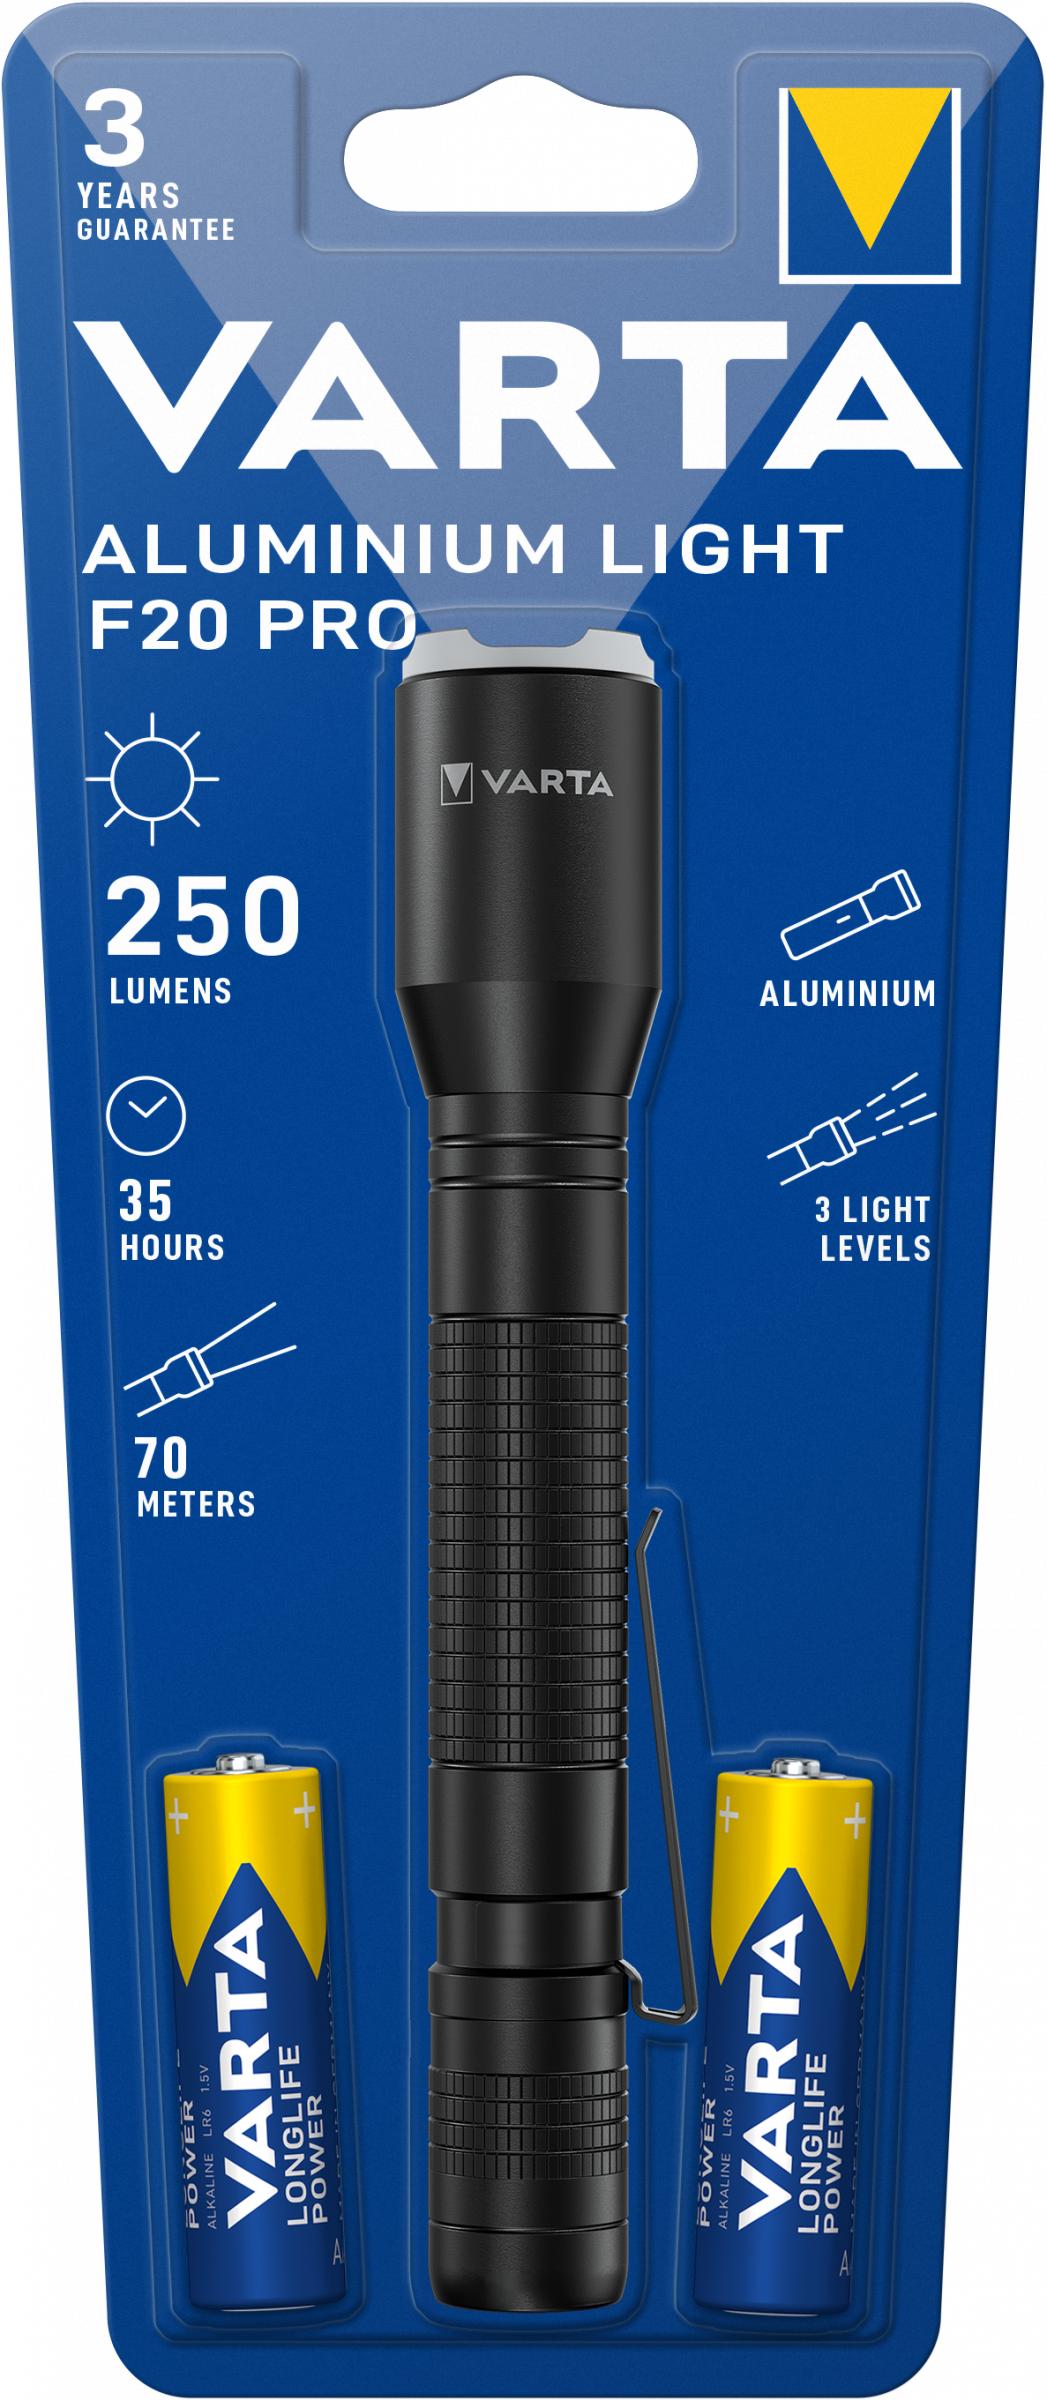 Varta Aluminum Light F20 Pro incl. 2xAA batteries